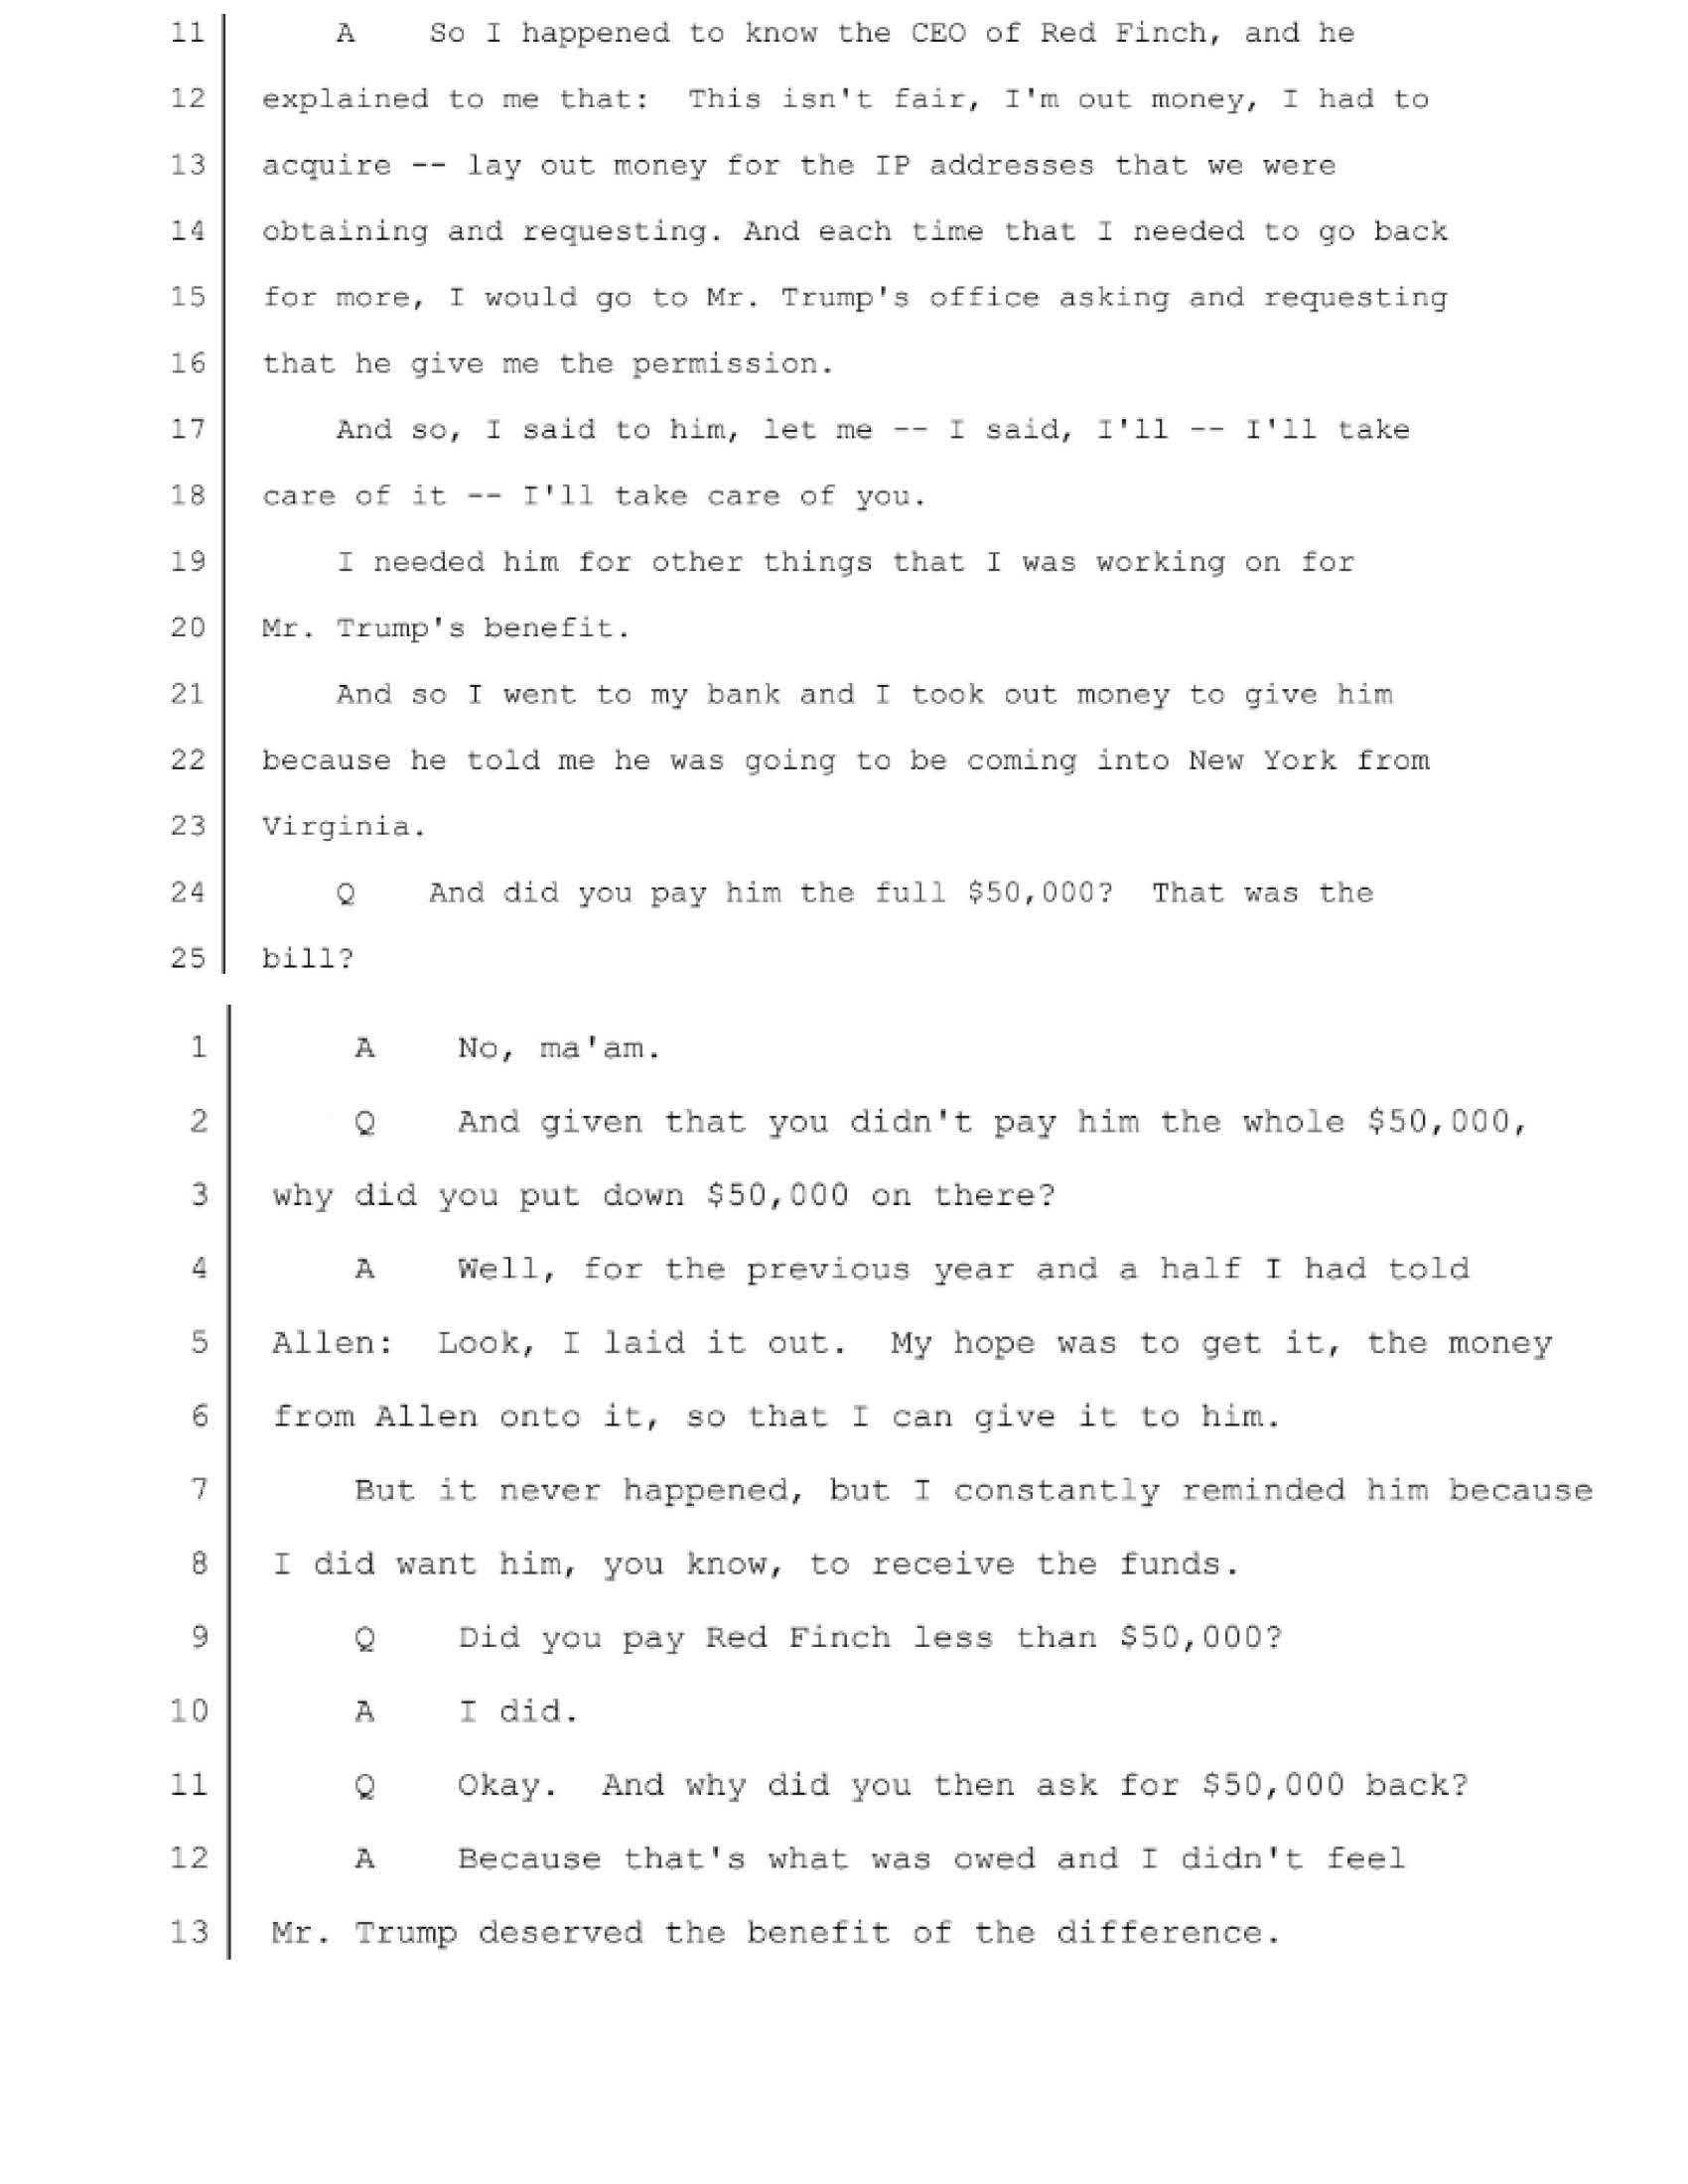 Cohen testimony2.jpg